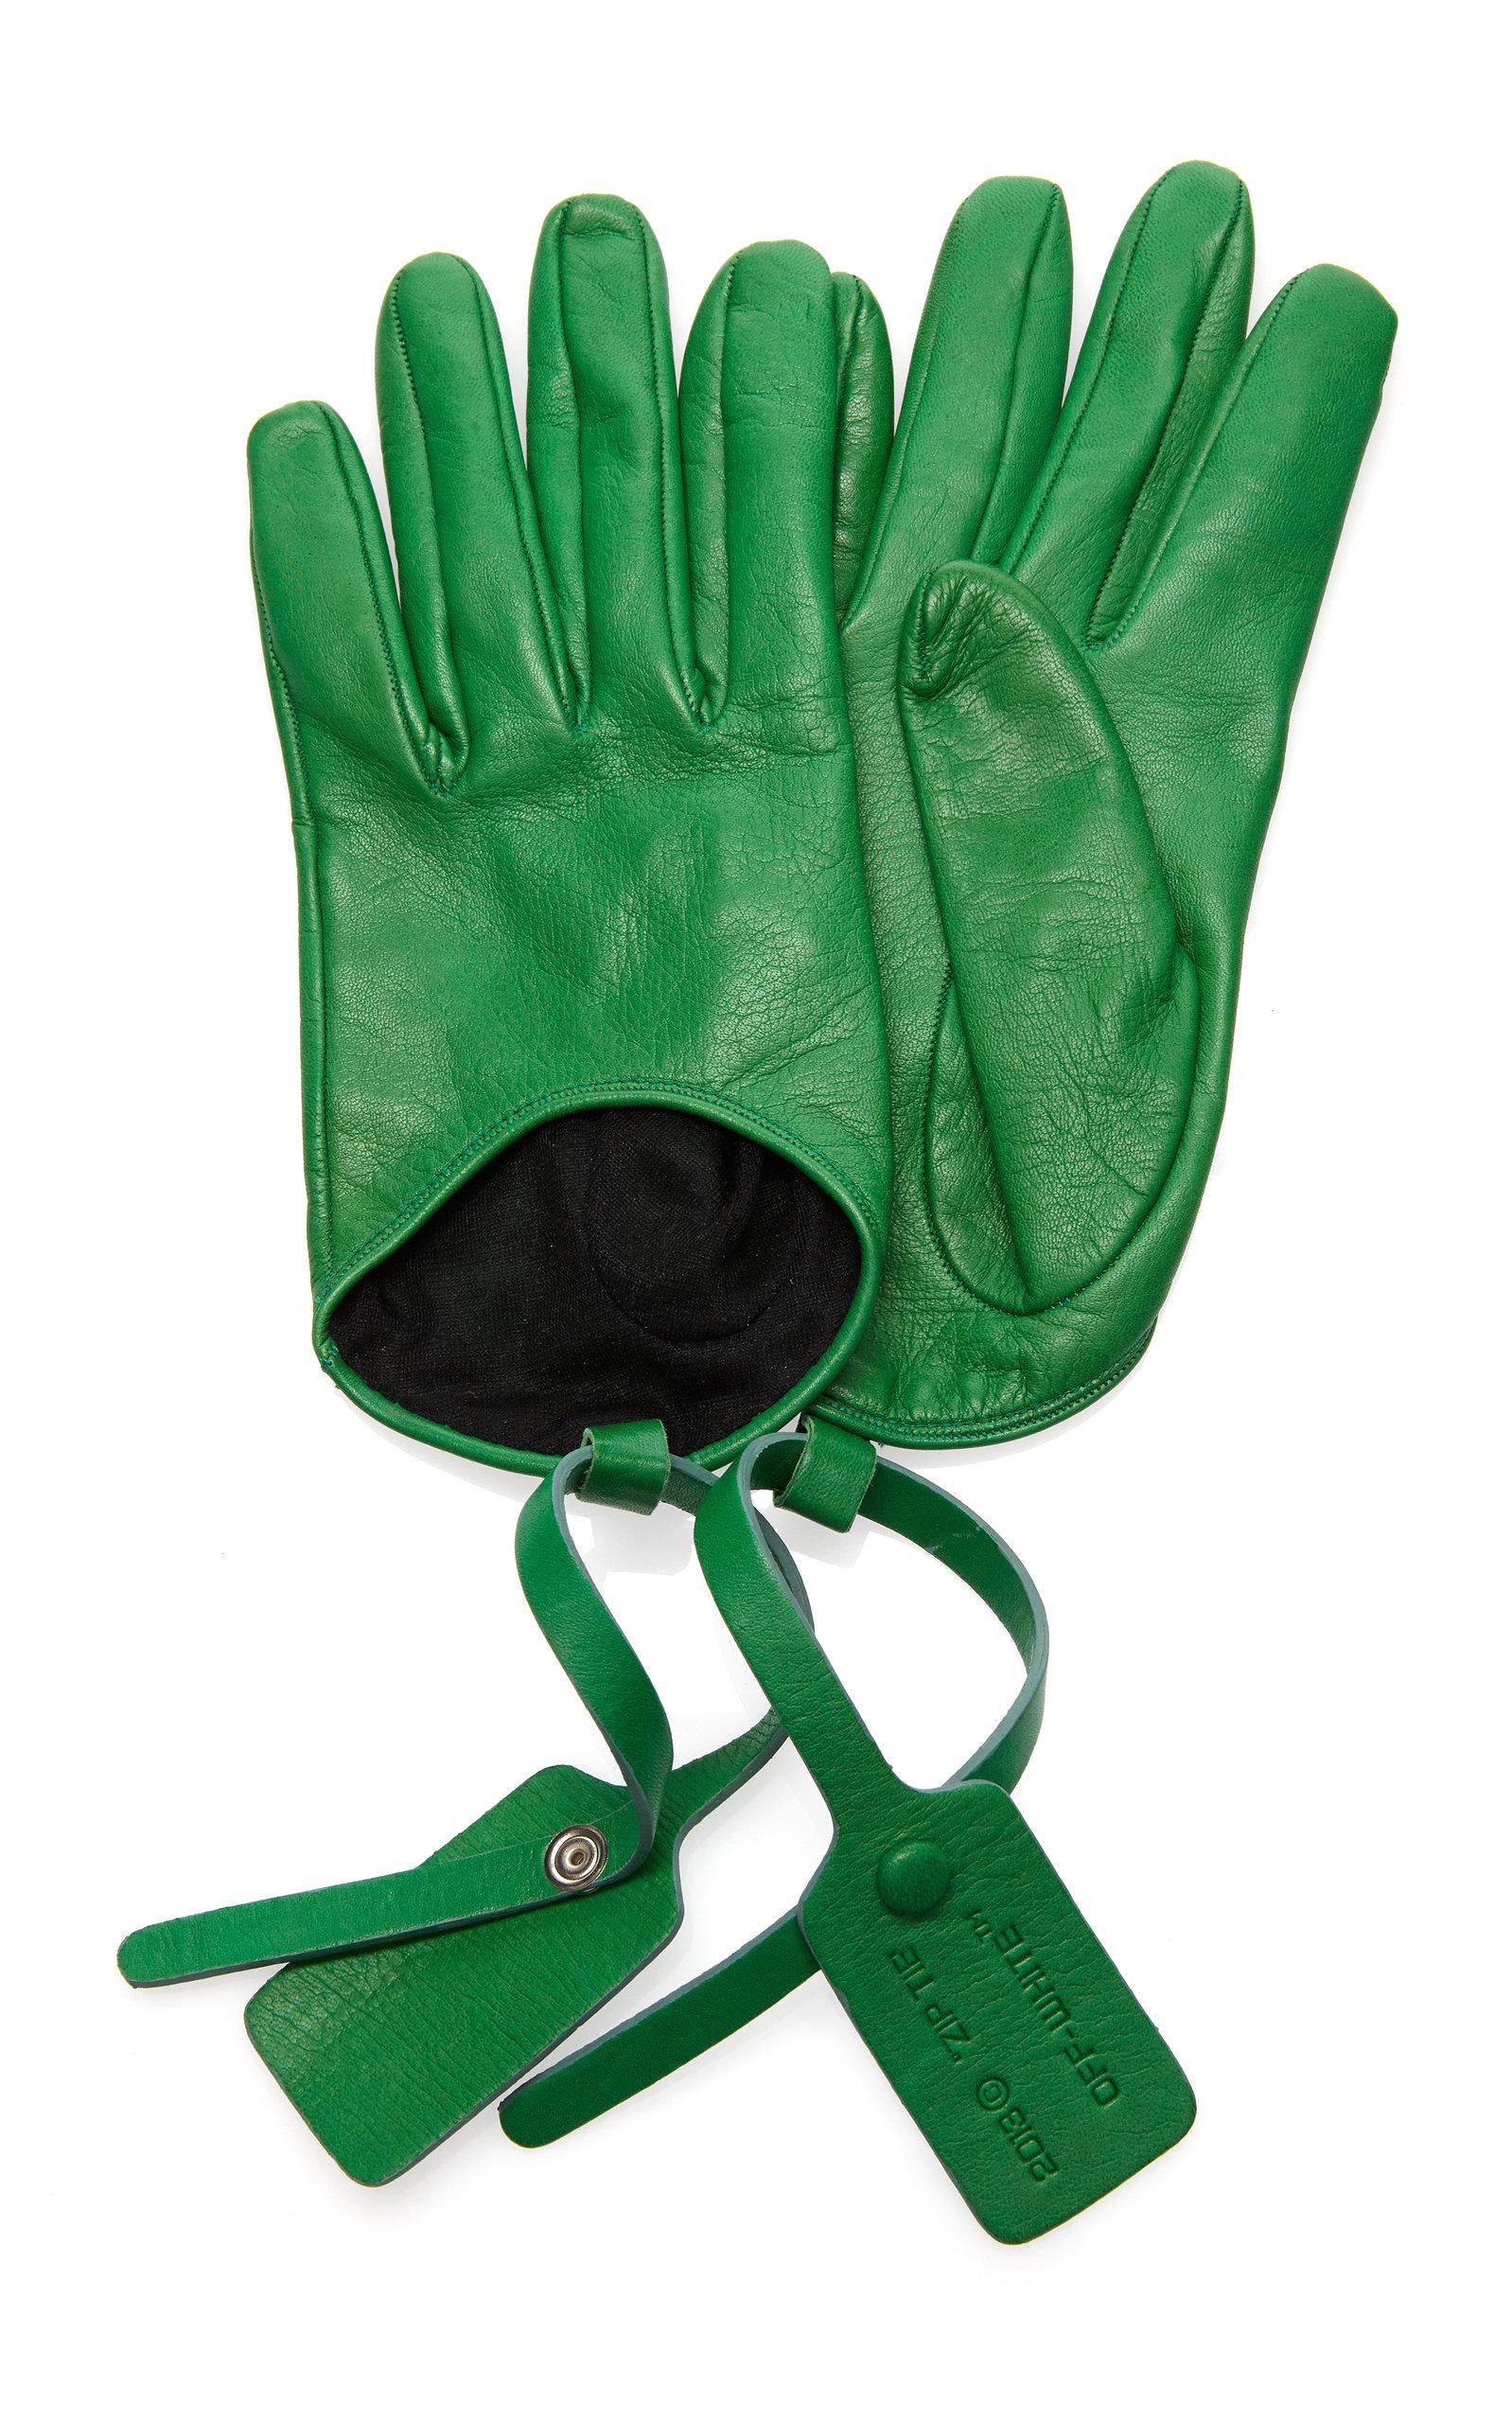 Off-White c/o Virgil Abloh Zip Tie Gloves in Green